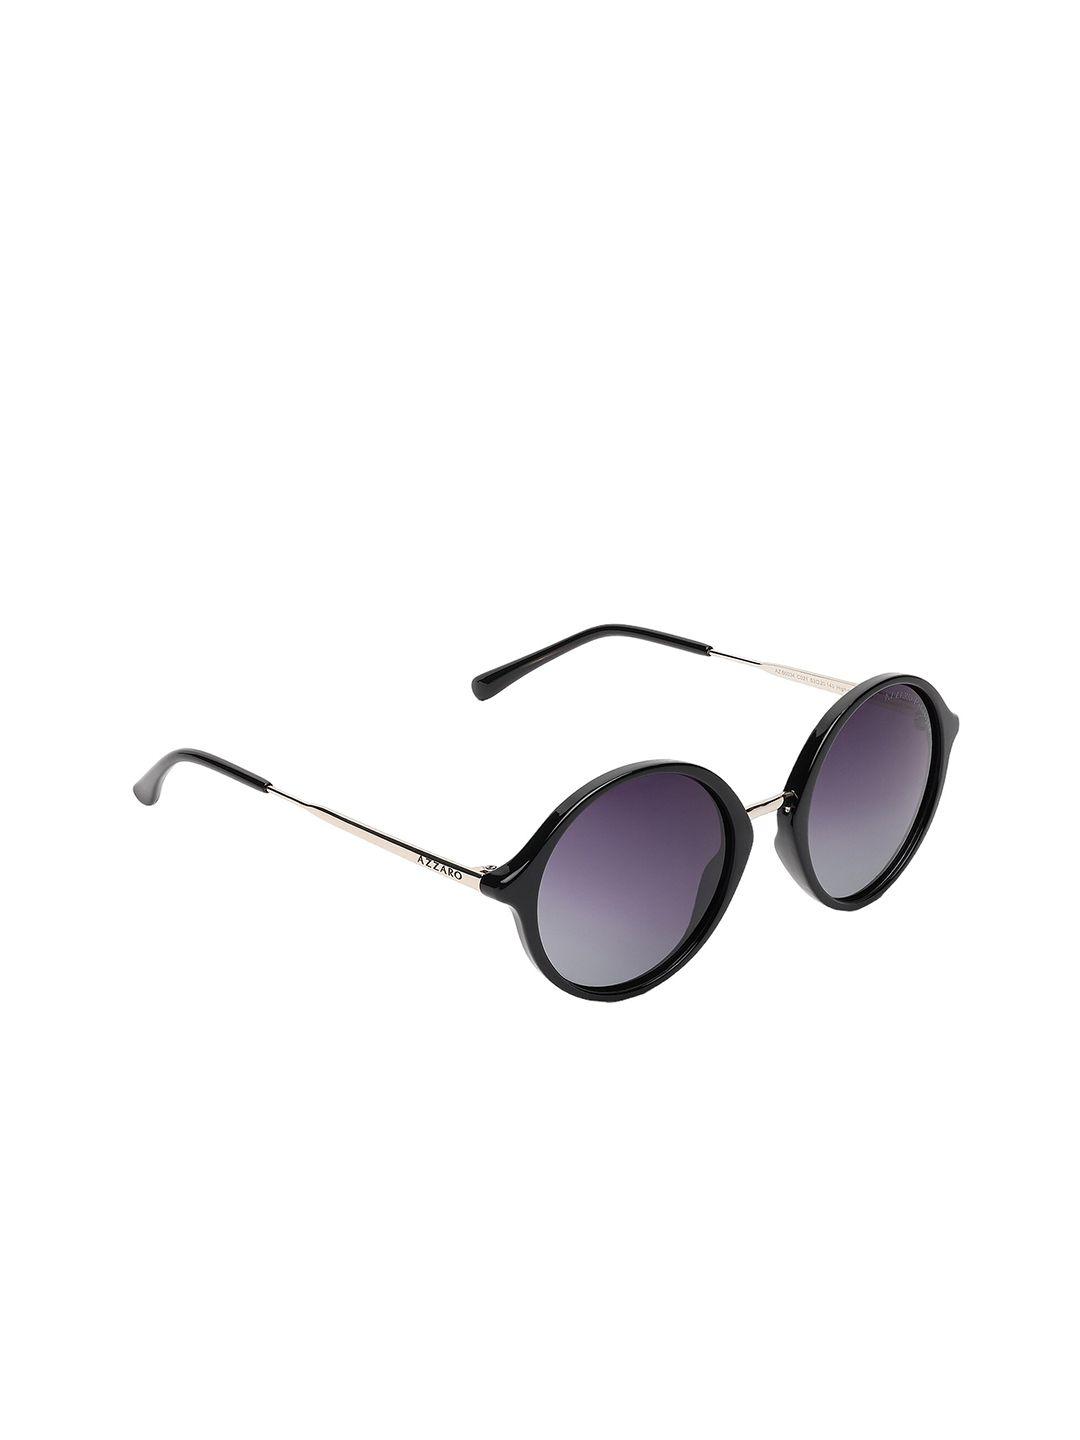 azzaro-women-round-sunglasses-with-uv-protected-lens